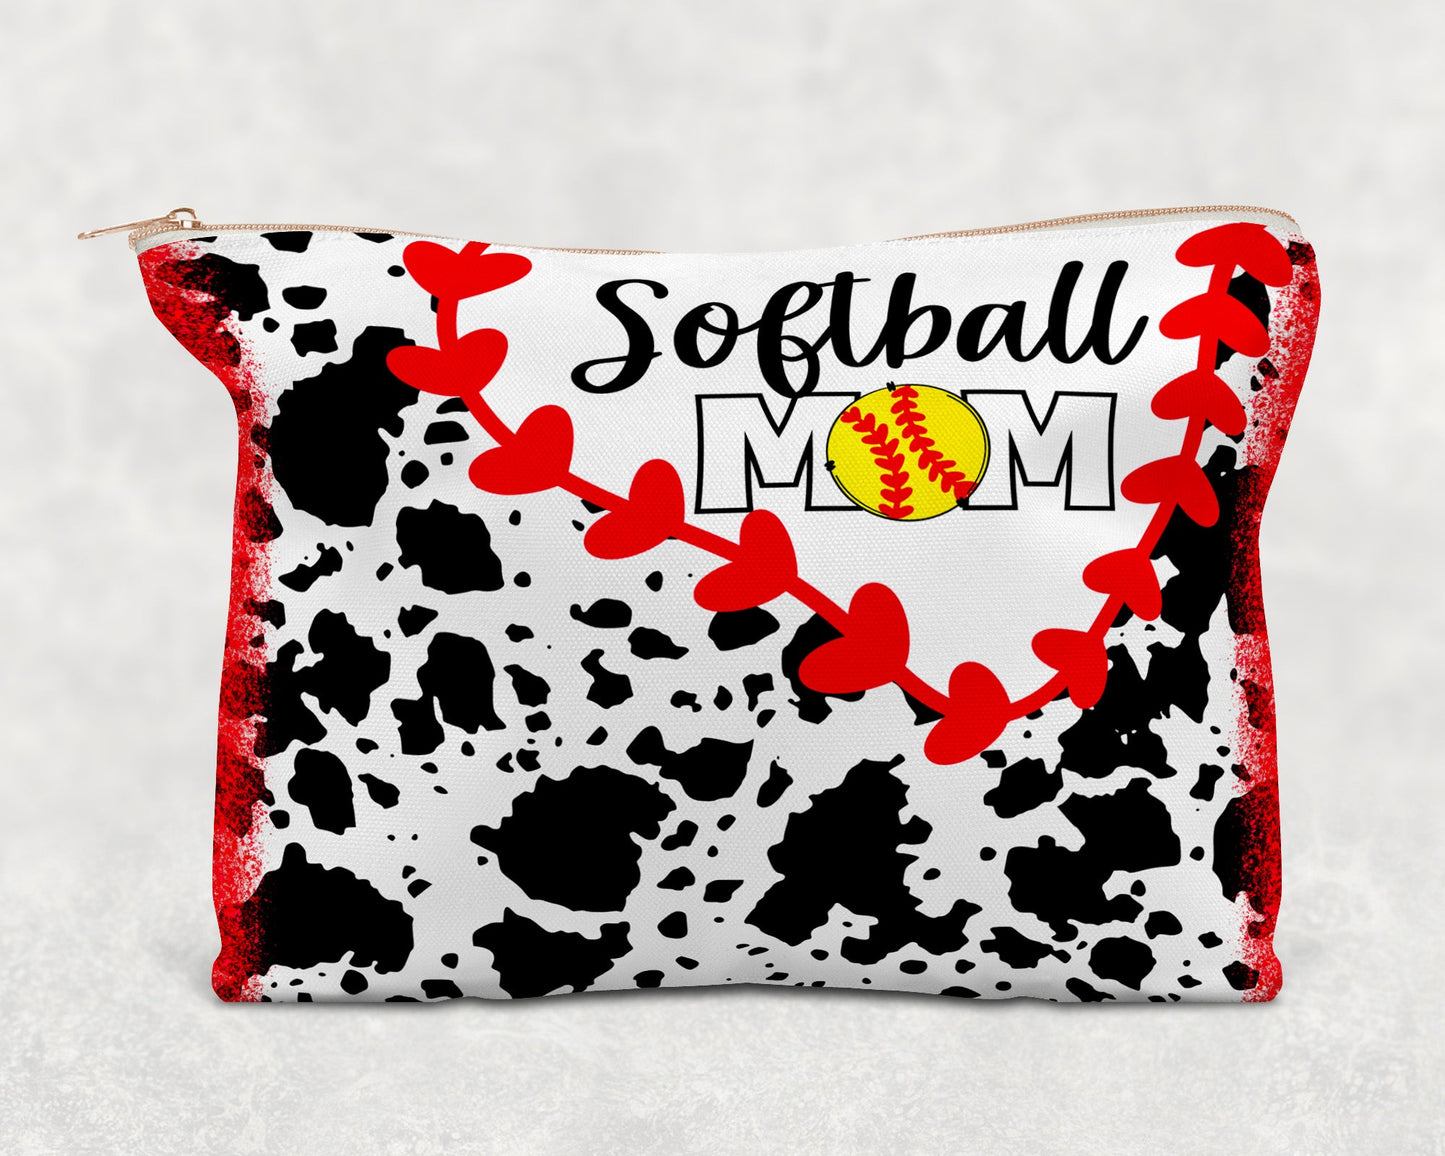 Softball Mom Cow Print Printed Canvas Zipper Bag - Bag